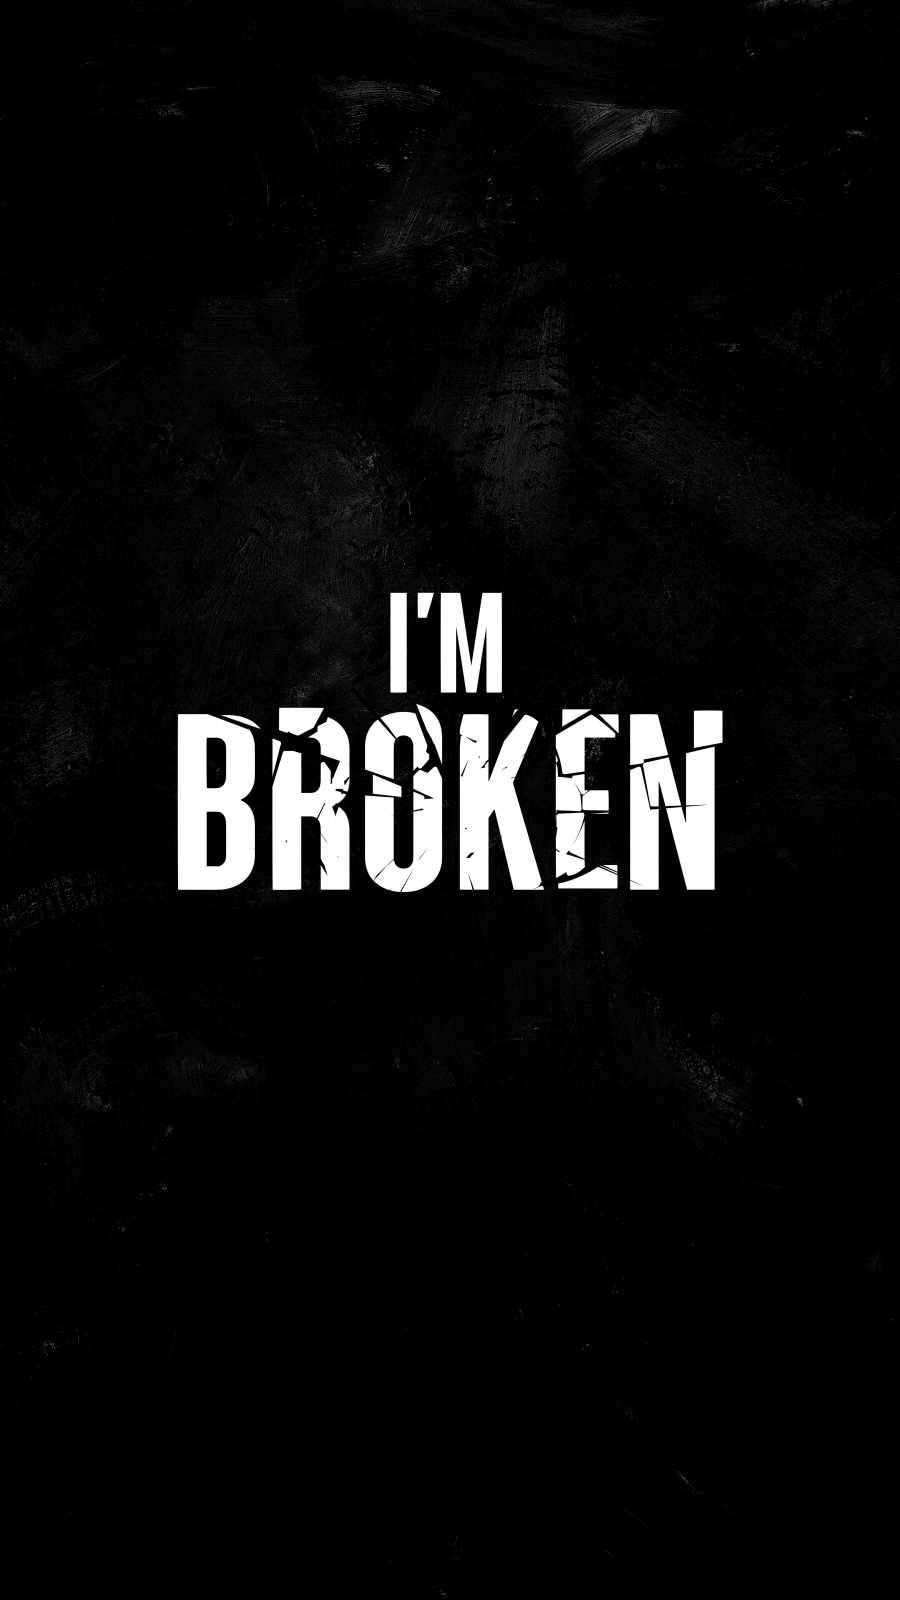 19+] I Am Broken Wallpapers - WallpaperSafari